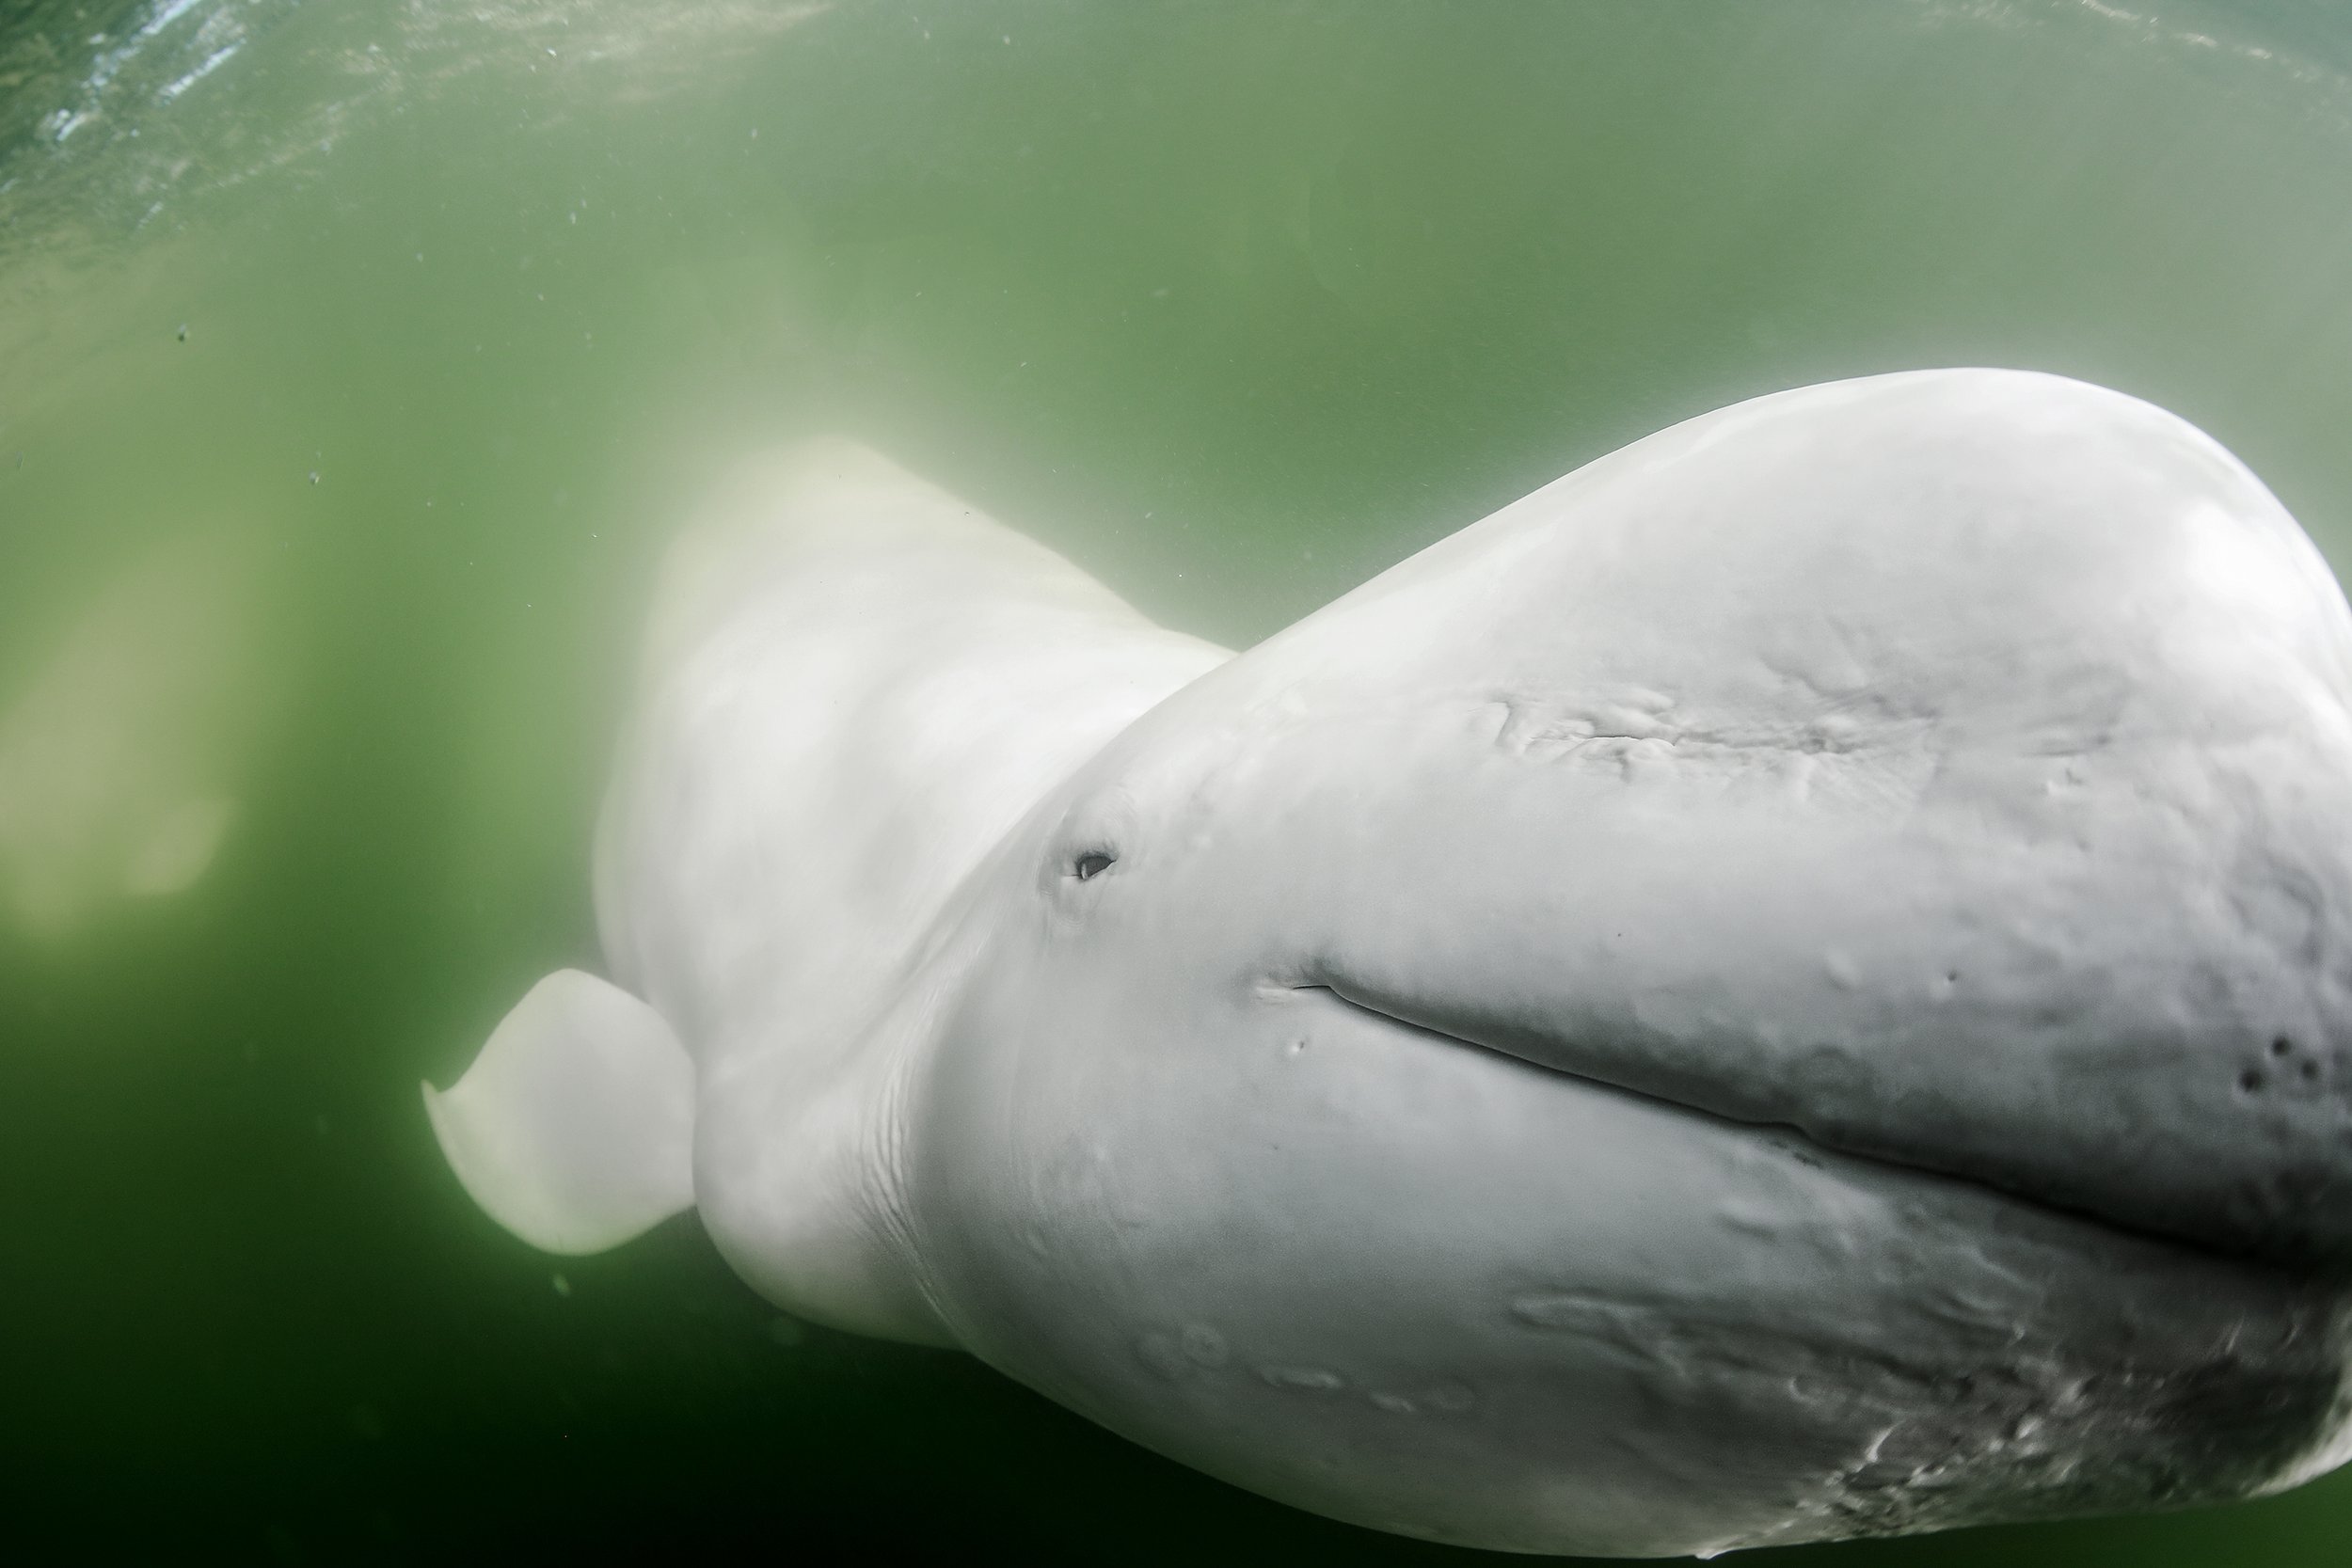 Ceta Base - Maris, a beluga, died on October 22nd, 2015 at